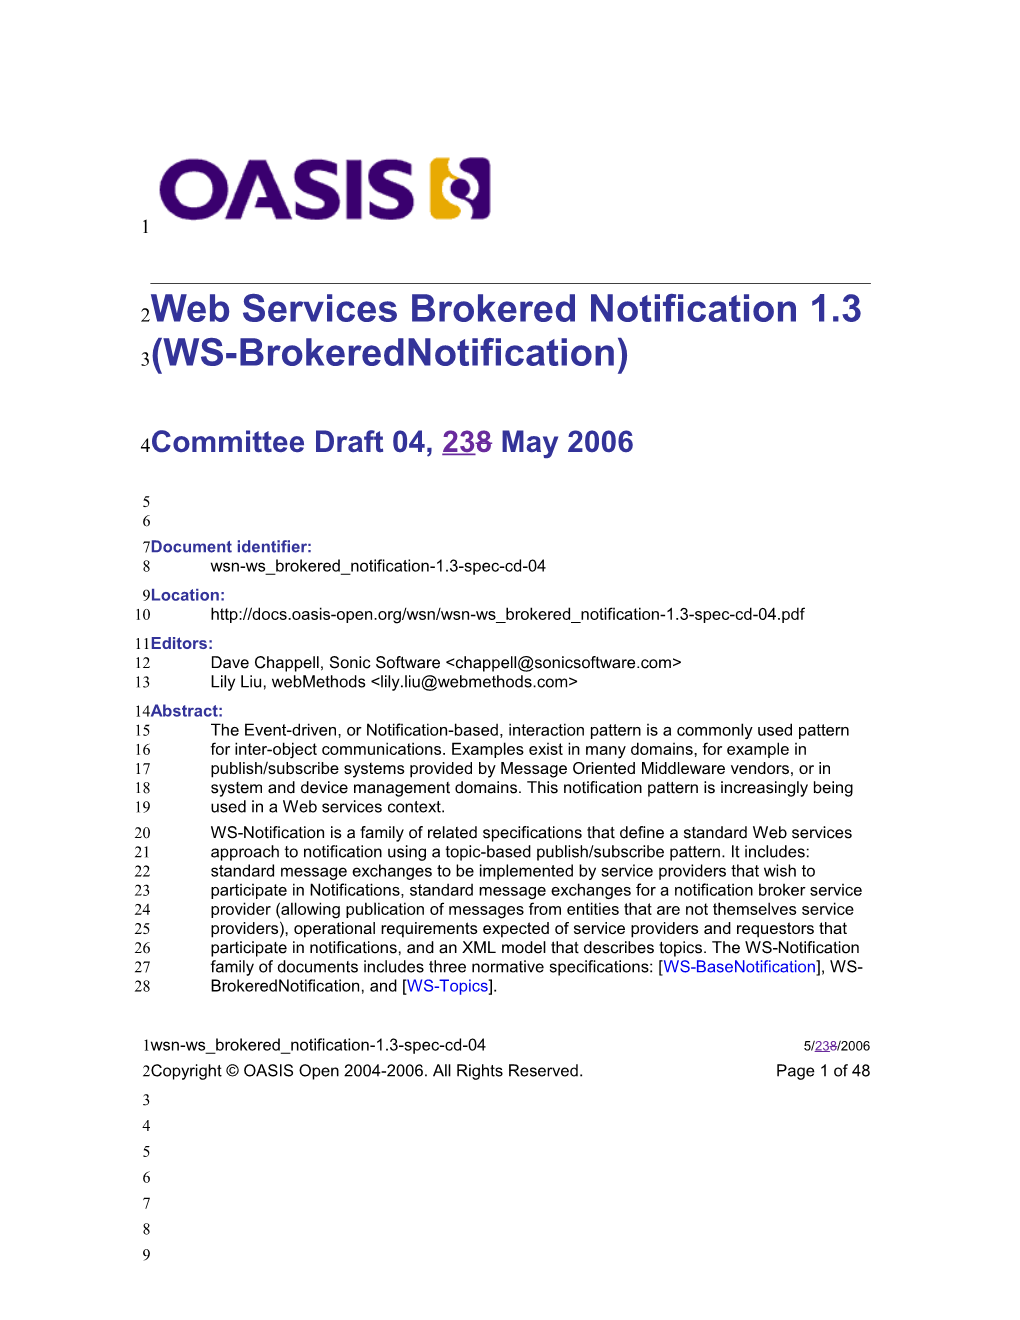 Web Services Brokered Notification 1.3 (WS-Brokerednotification)